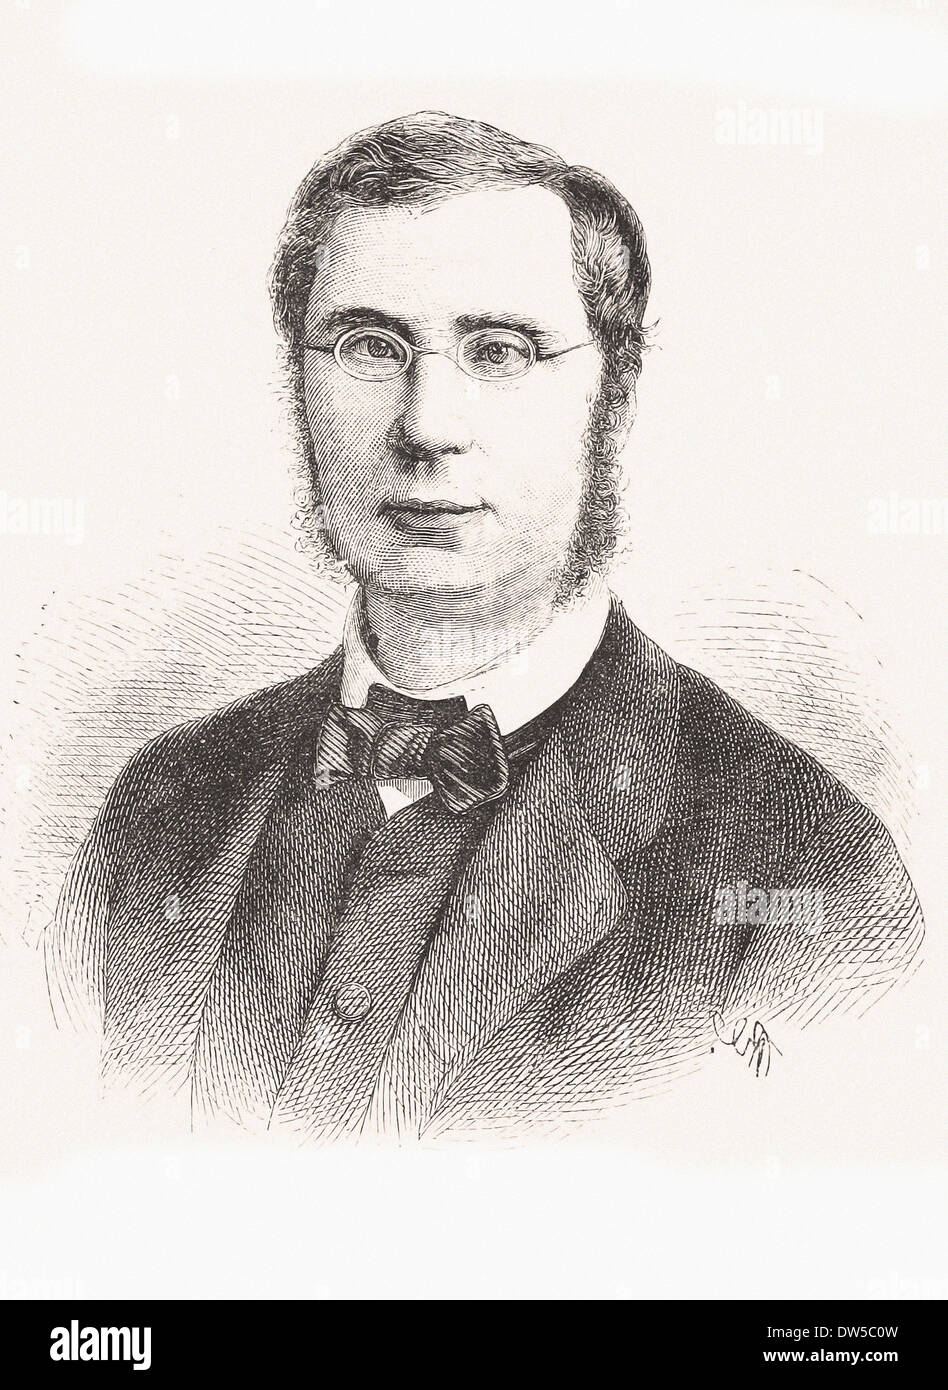 Porträt von Emile Ollivier - Gravur XIX Jahrhundert Stockfoto